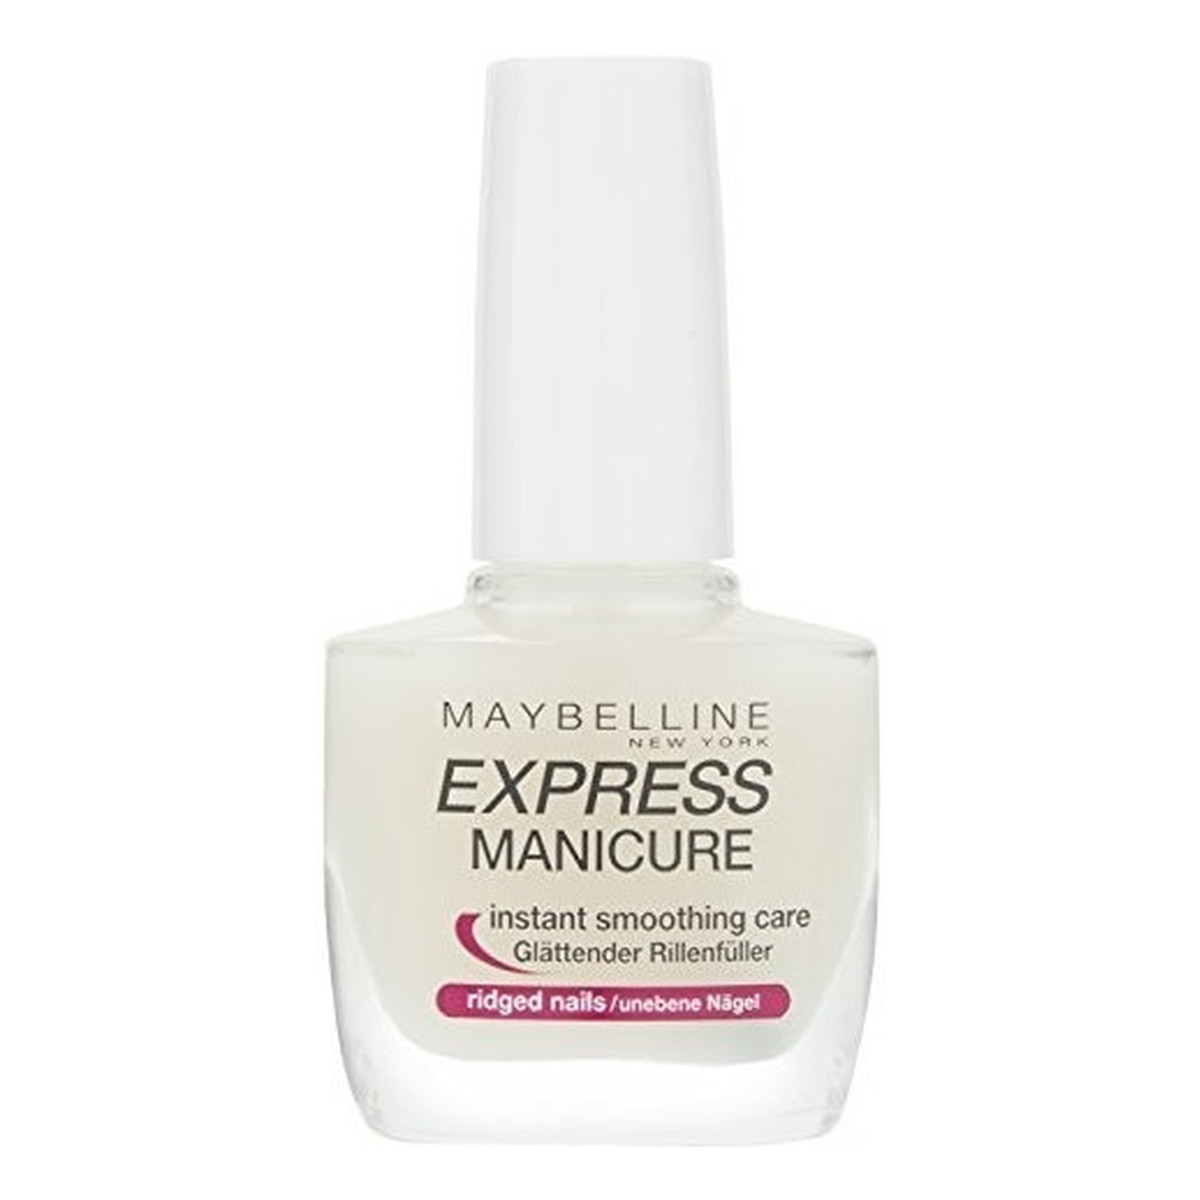 Maybelline Express Manicure Instant Smoothing Care baza wygladzajaca do paznokci 10ml